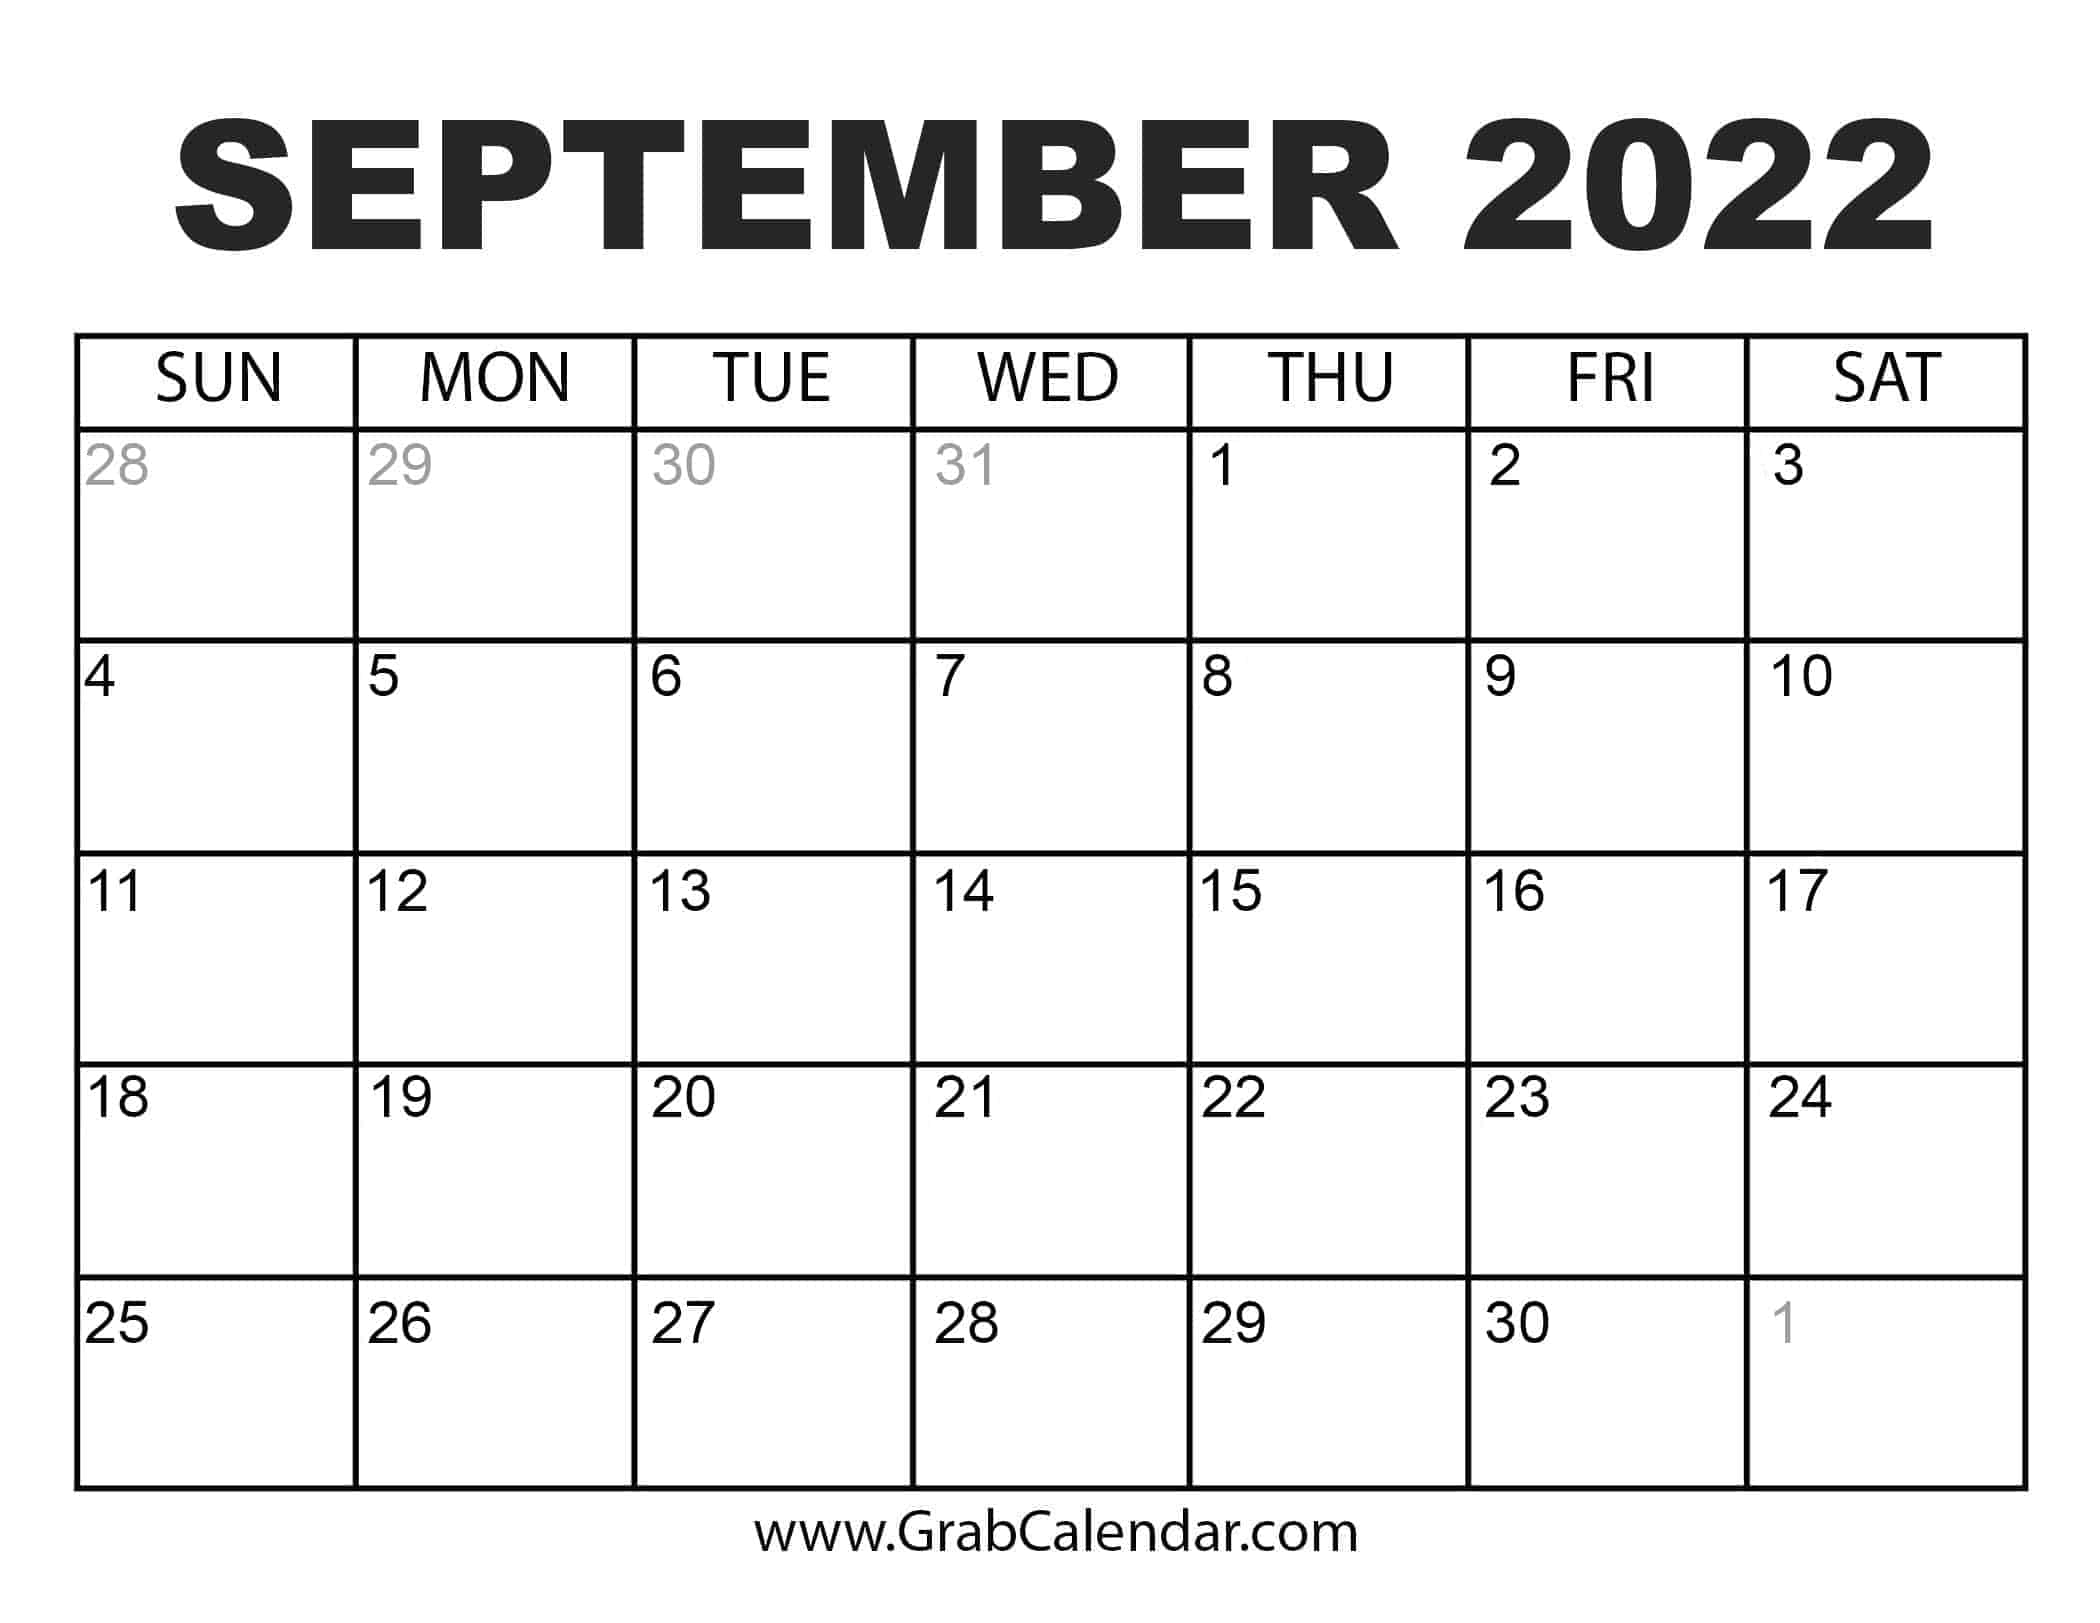 September 2022 Calendar With Holidays Printable September 2022 Calendar